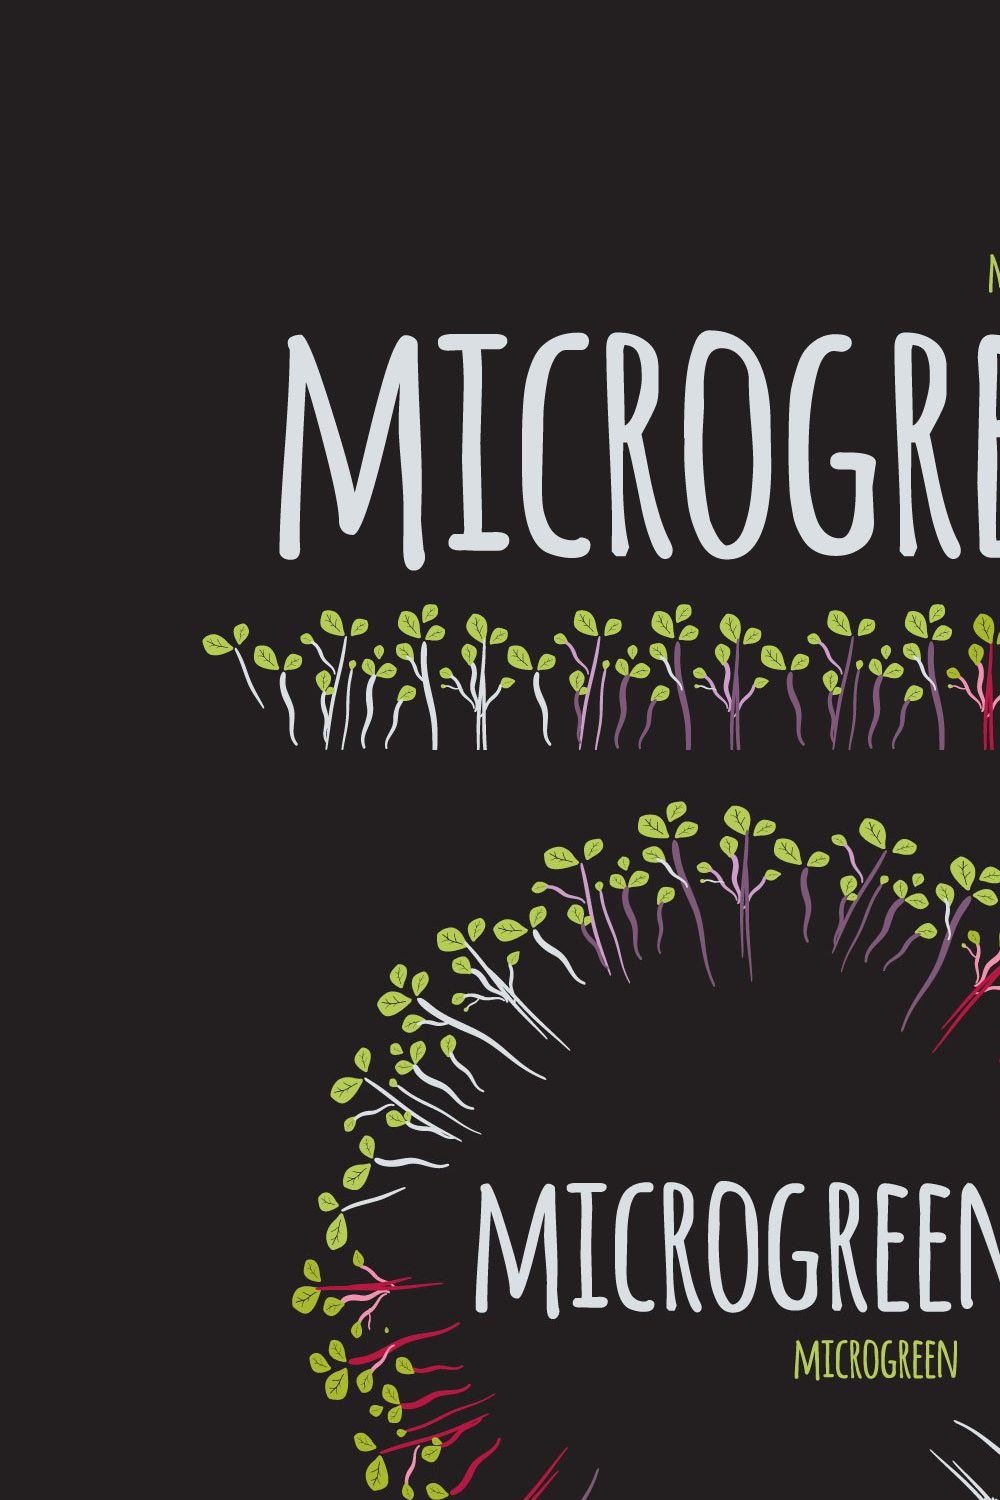 Microgreen logo pinterest preview image.